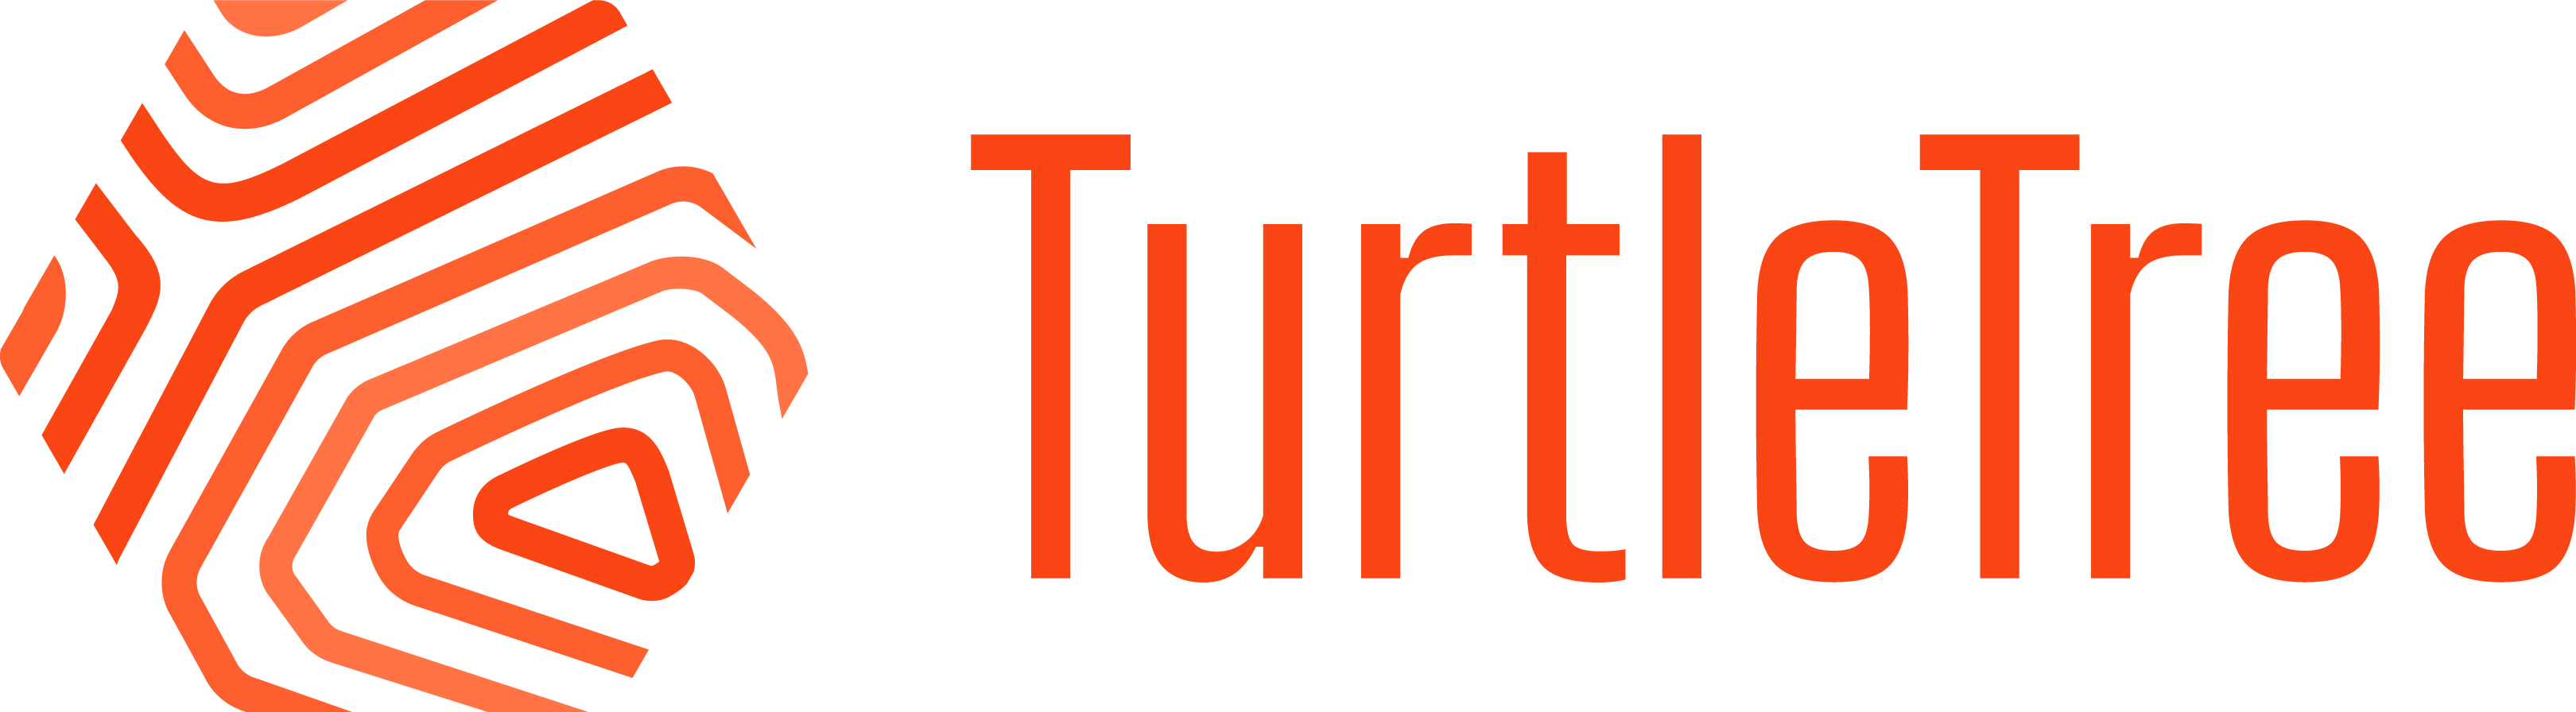 File:Logo Turtletree.png - Wikimedia Commons